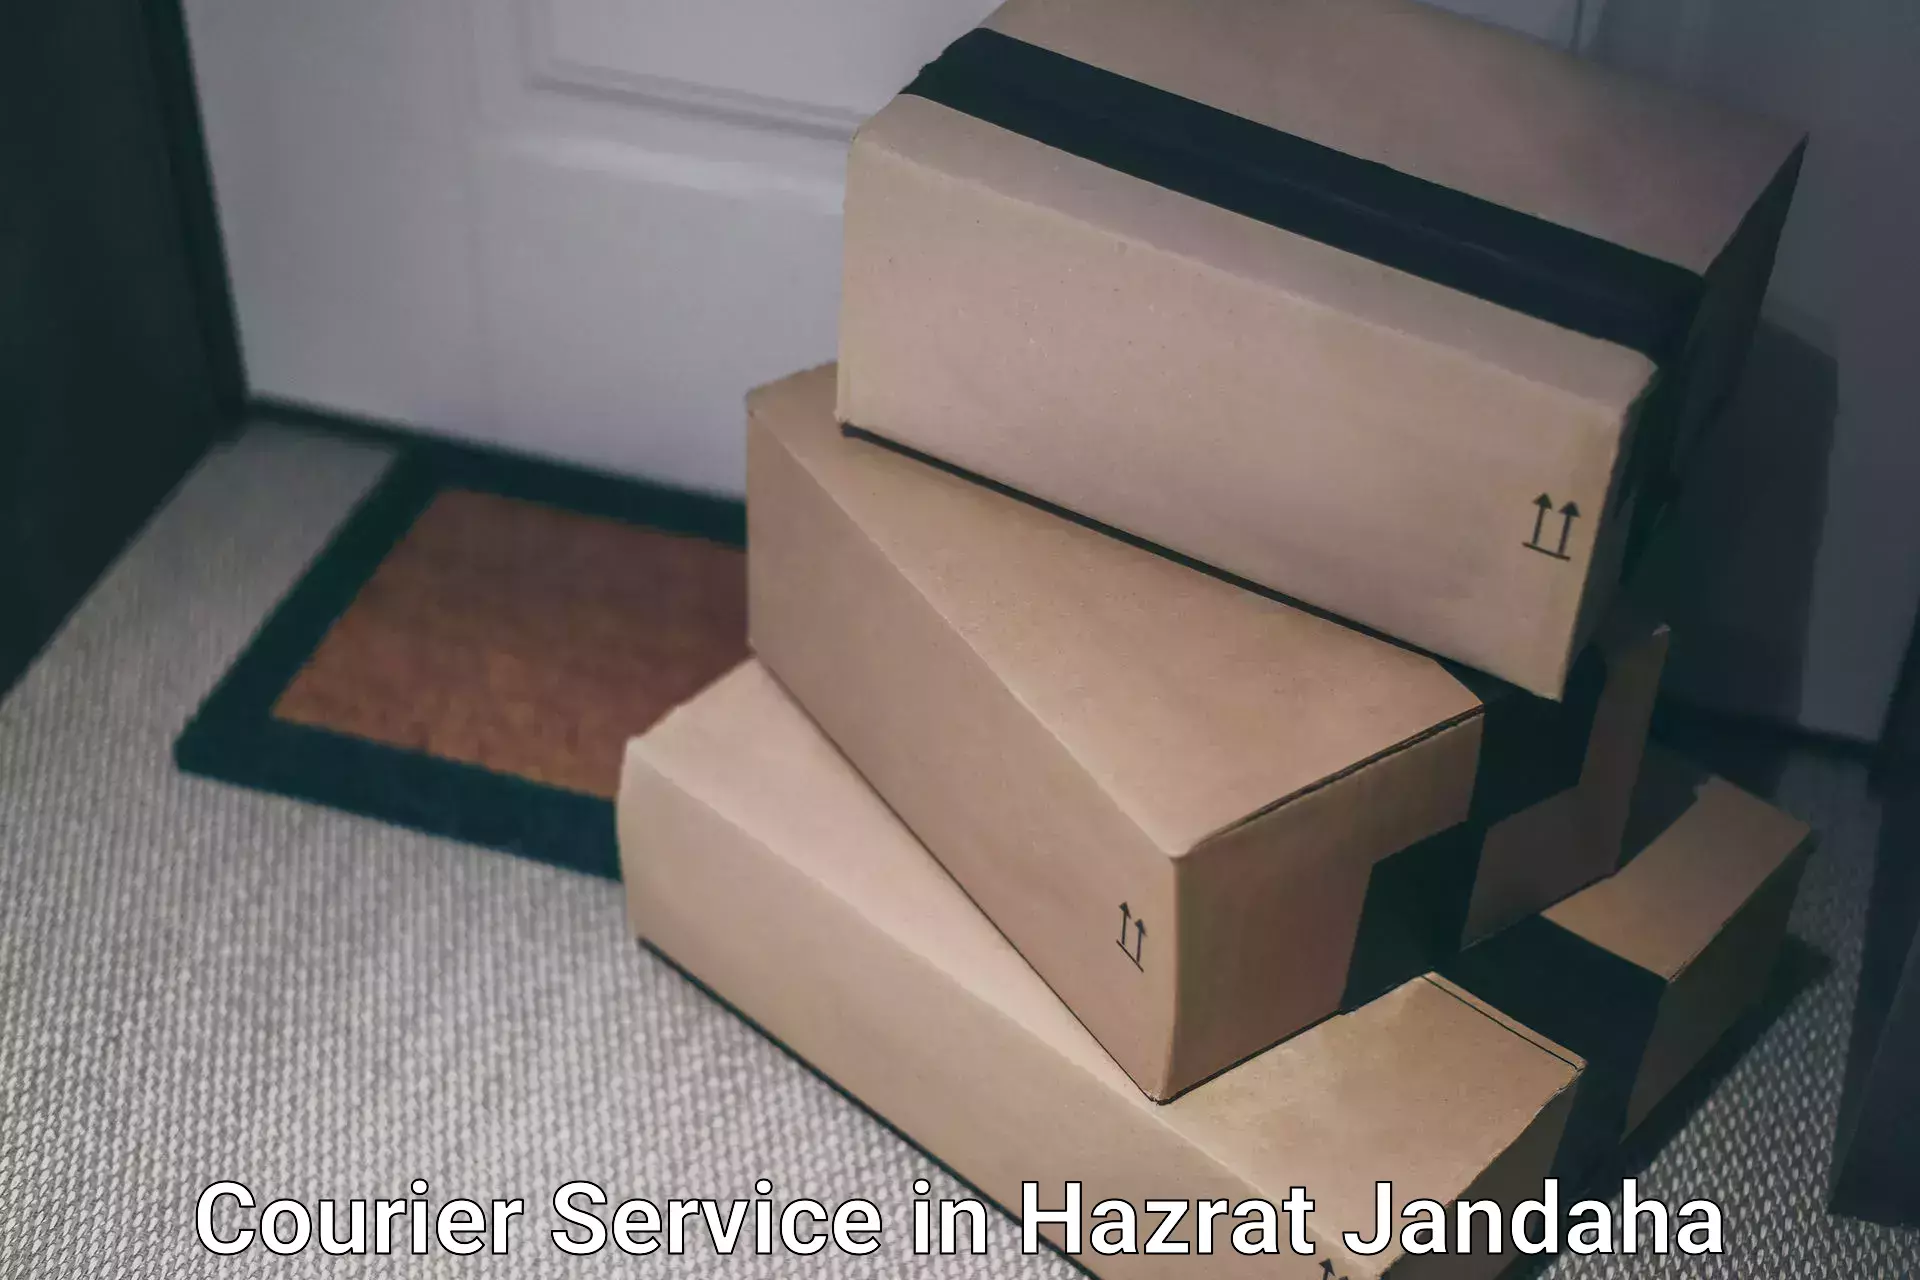 Digital courier platforms in Hazrat Jandaha